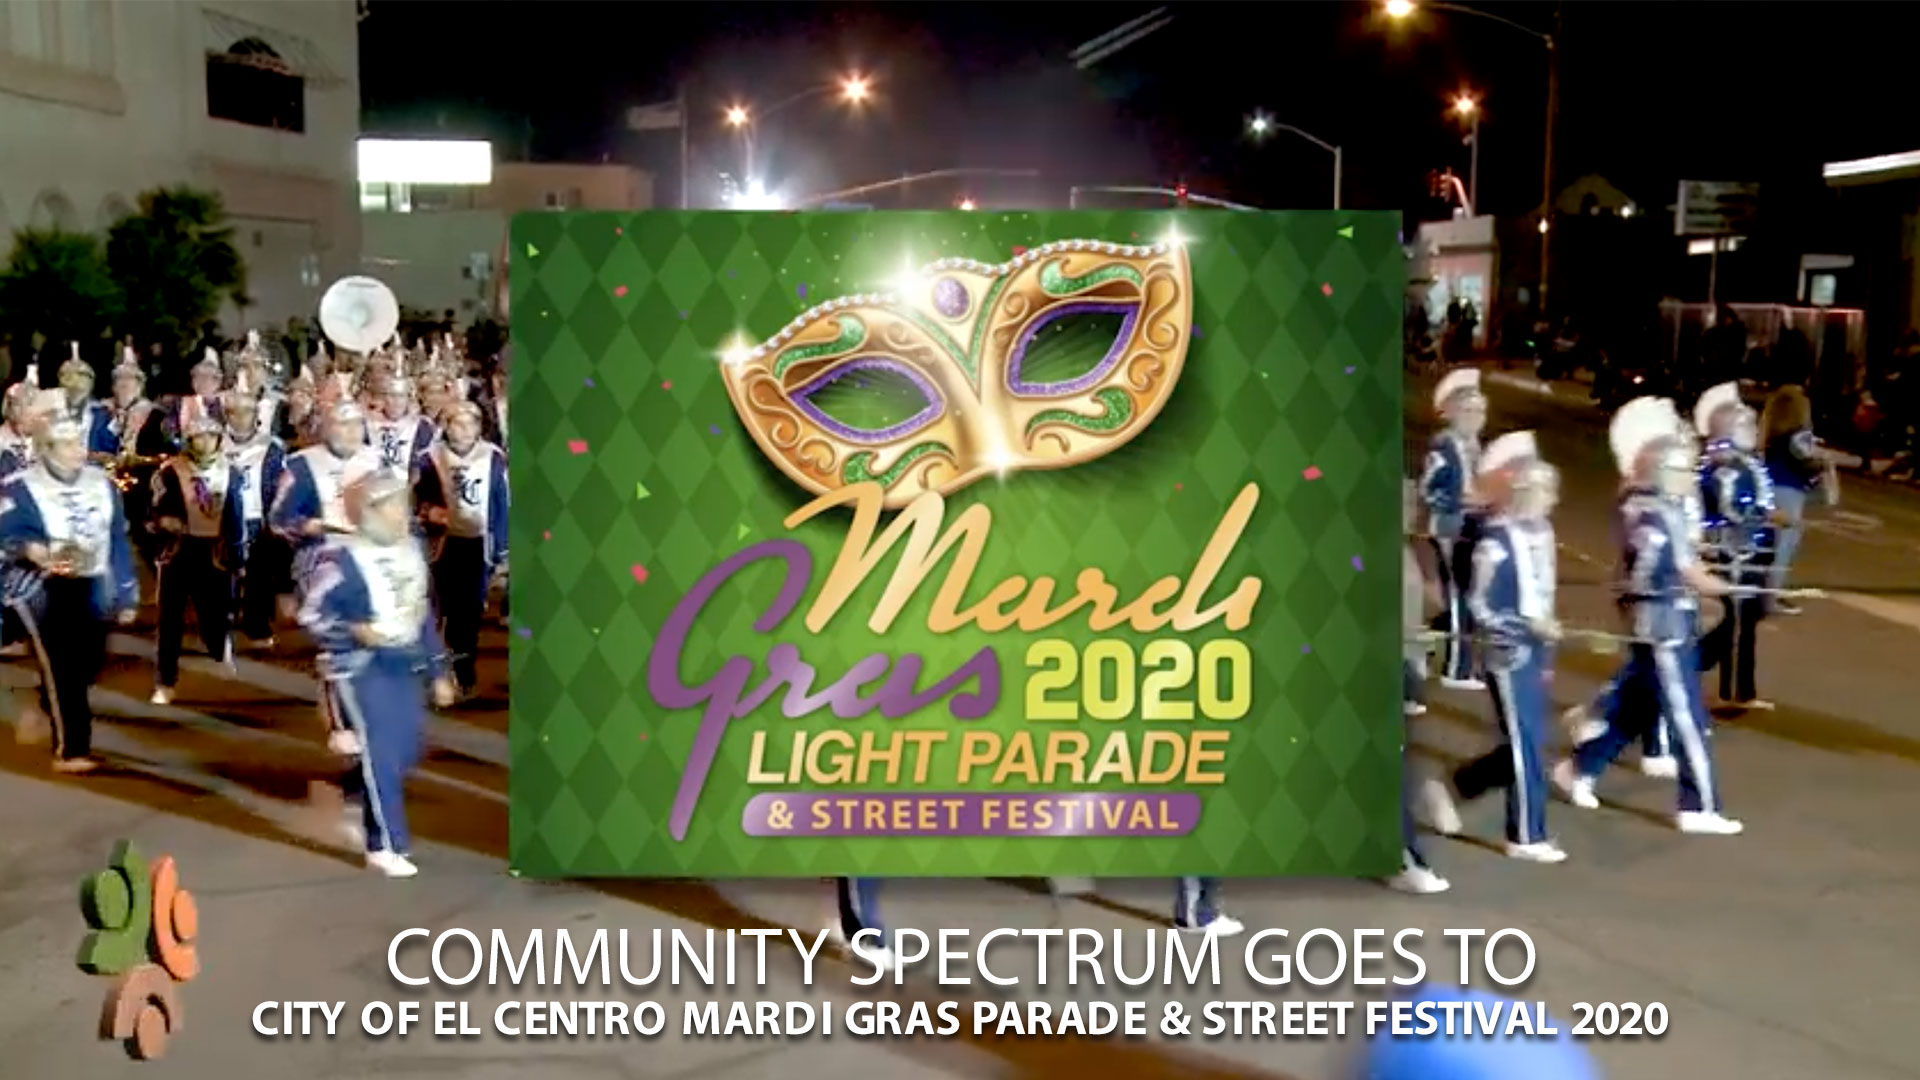 City of El Centro Mardi Gras Parade & Street Festival 2020